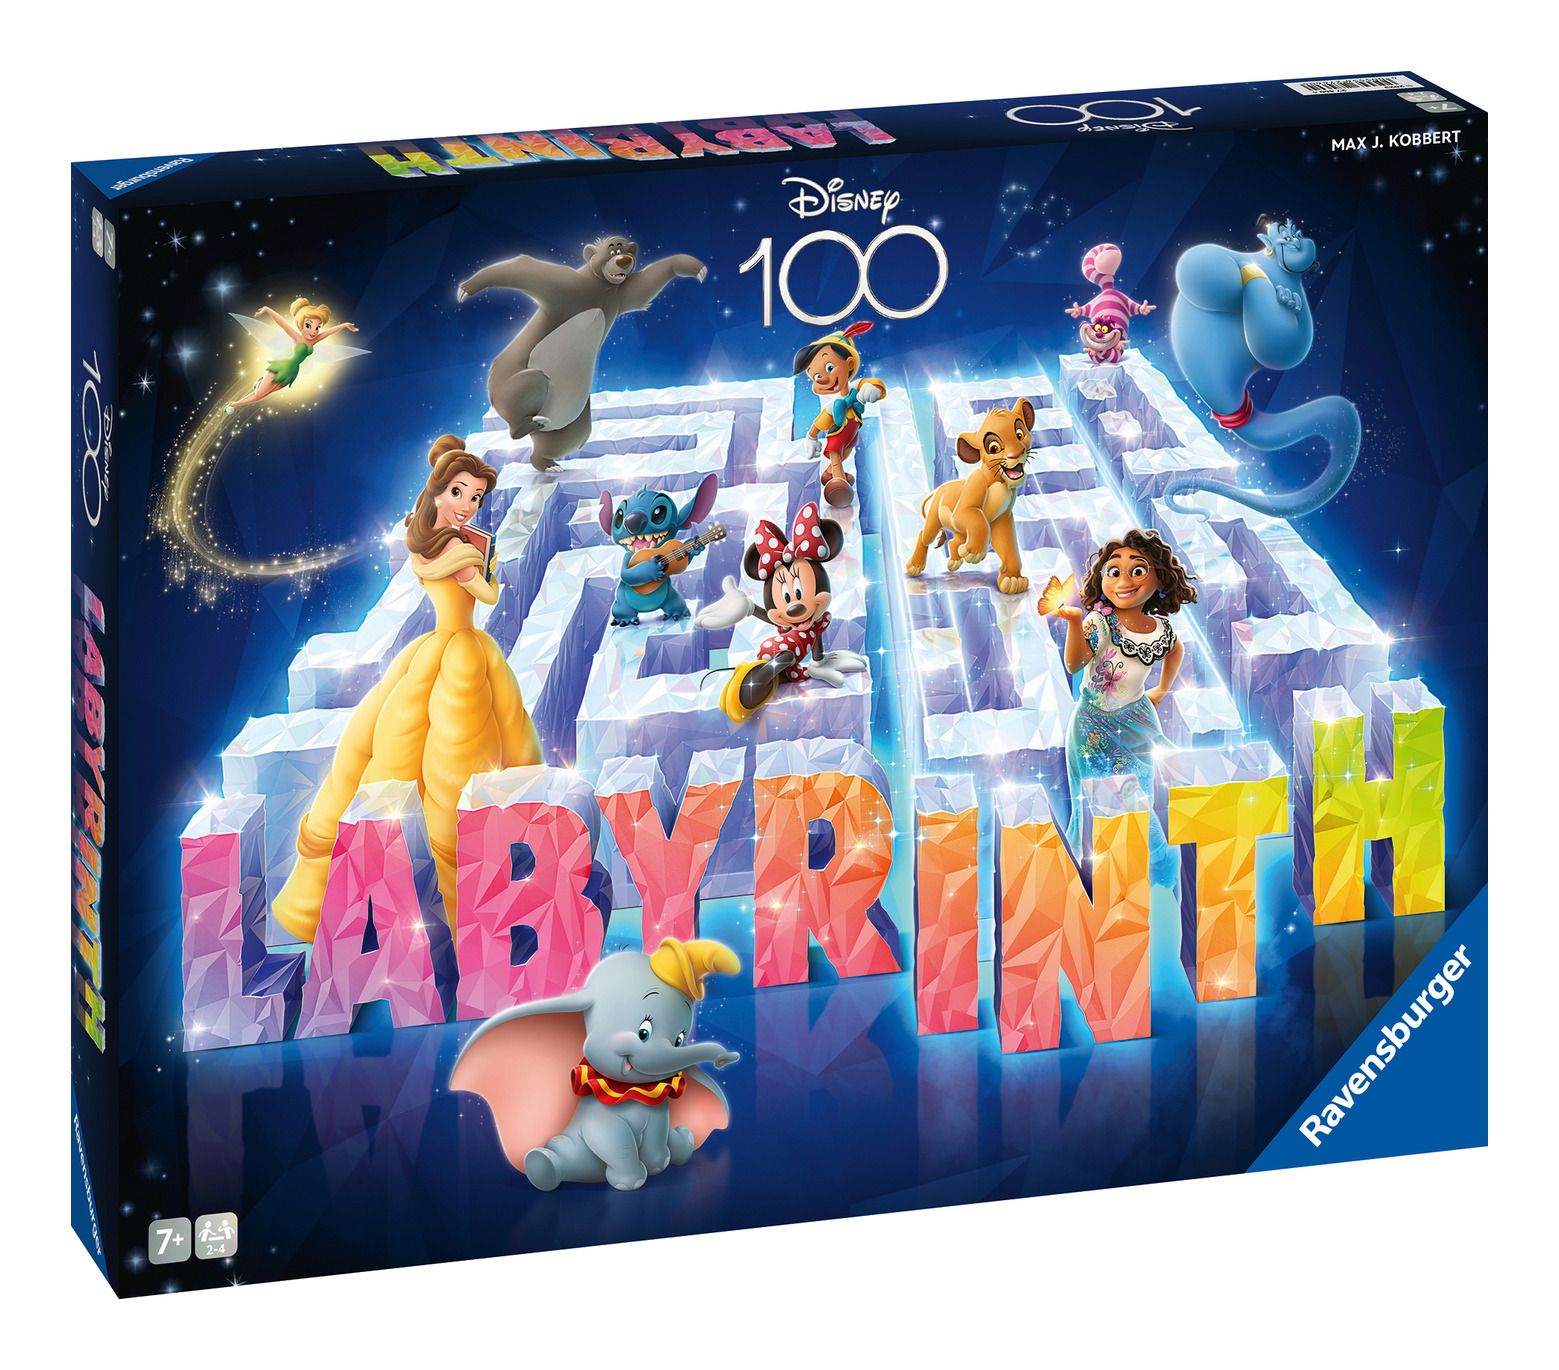 Disney Labyrinth 100th Anniversary - Albagame